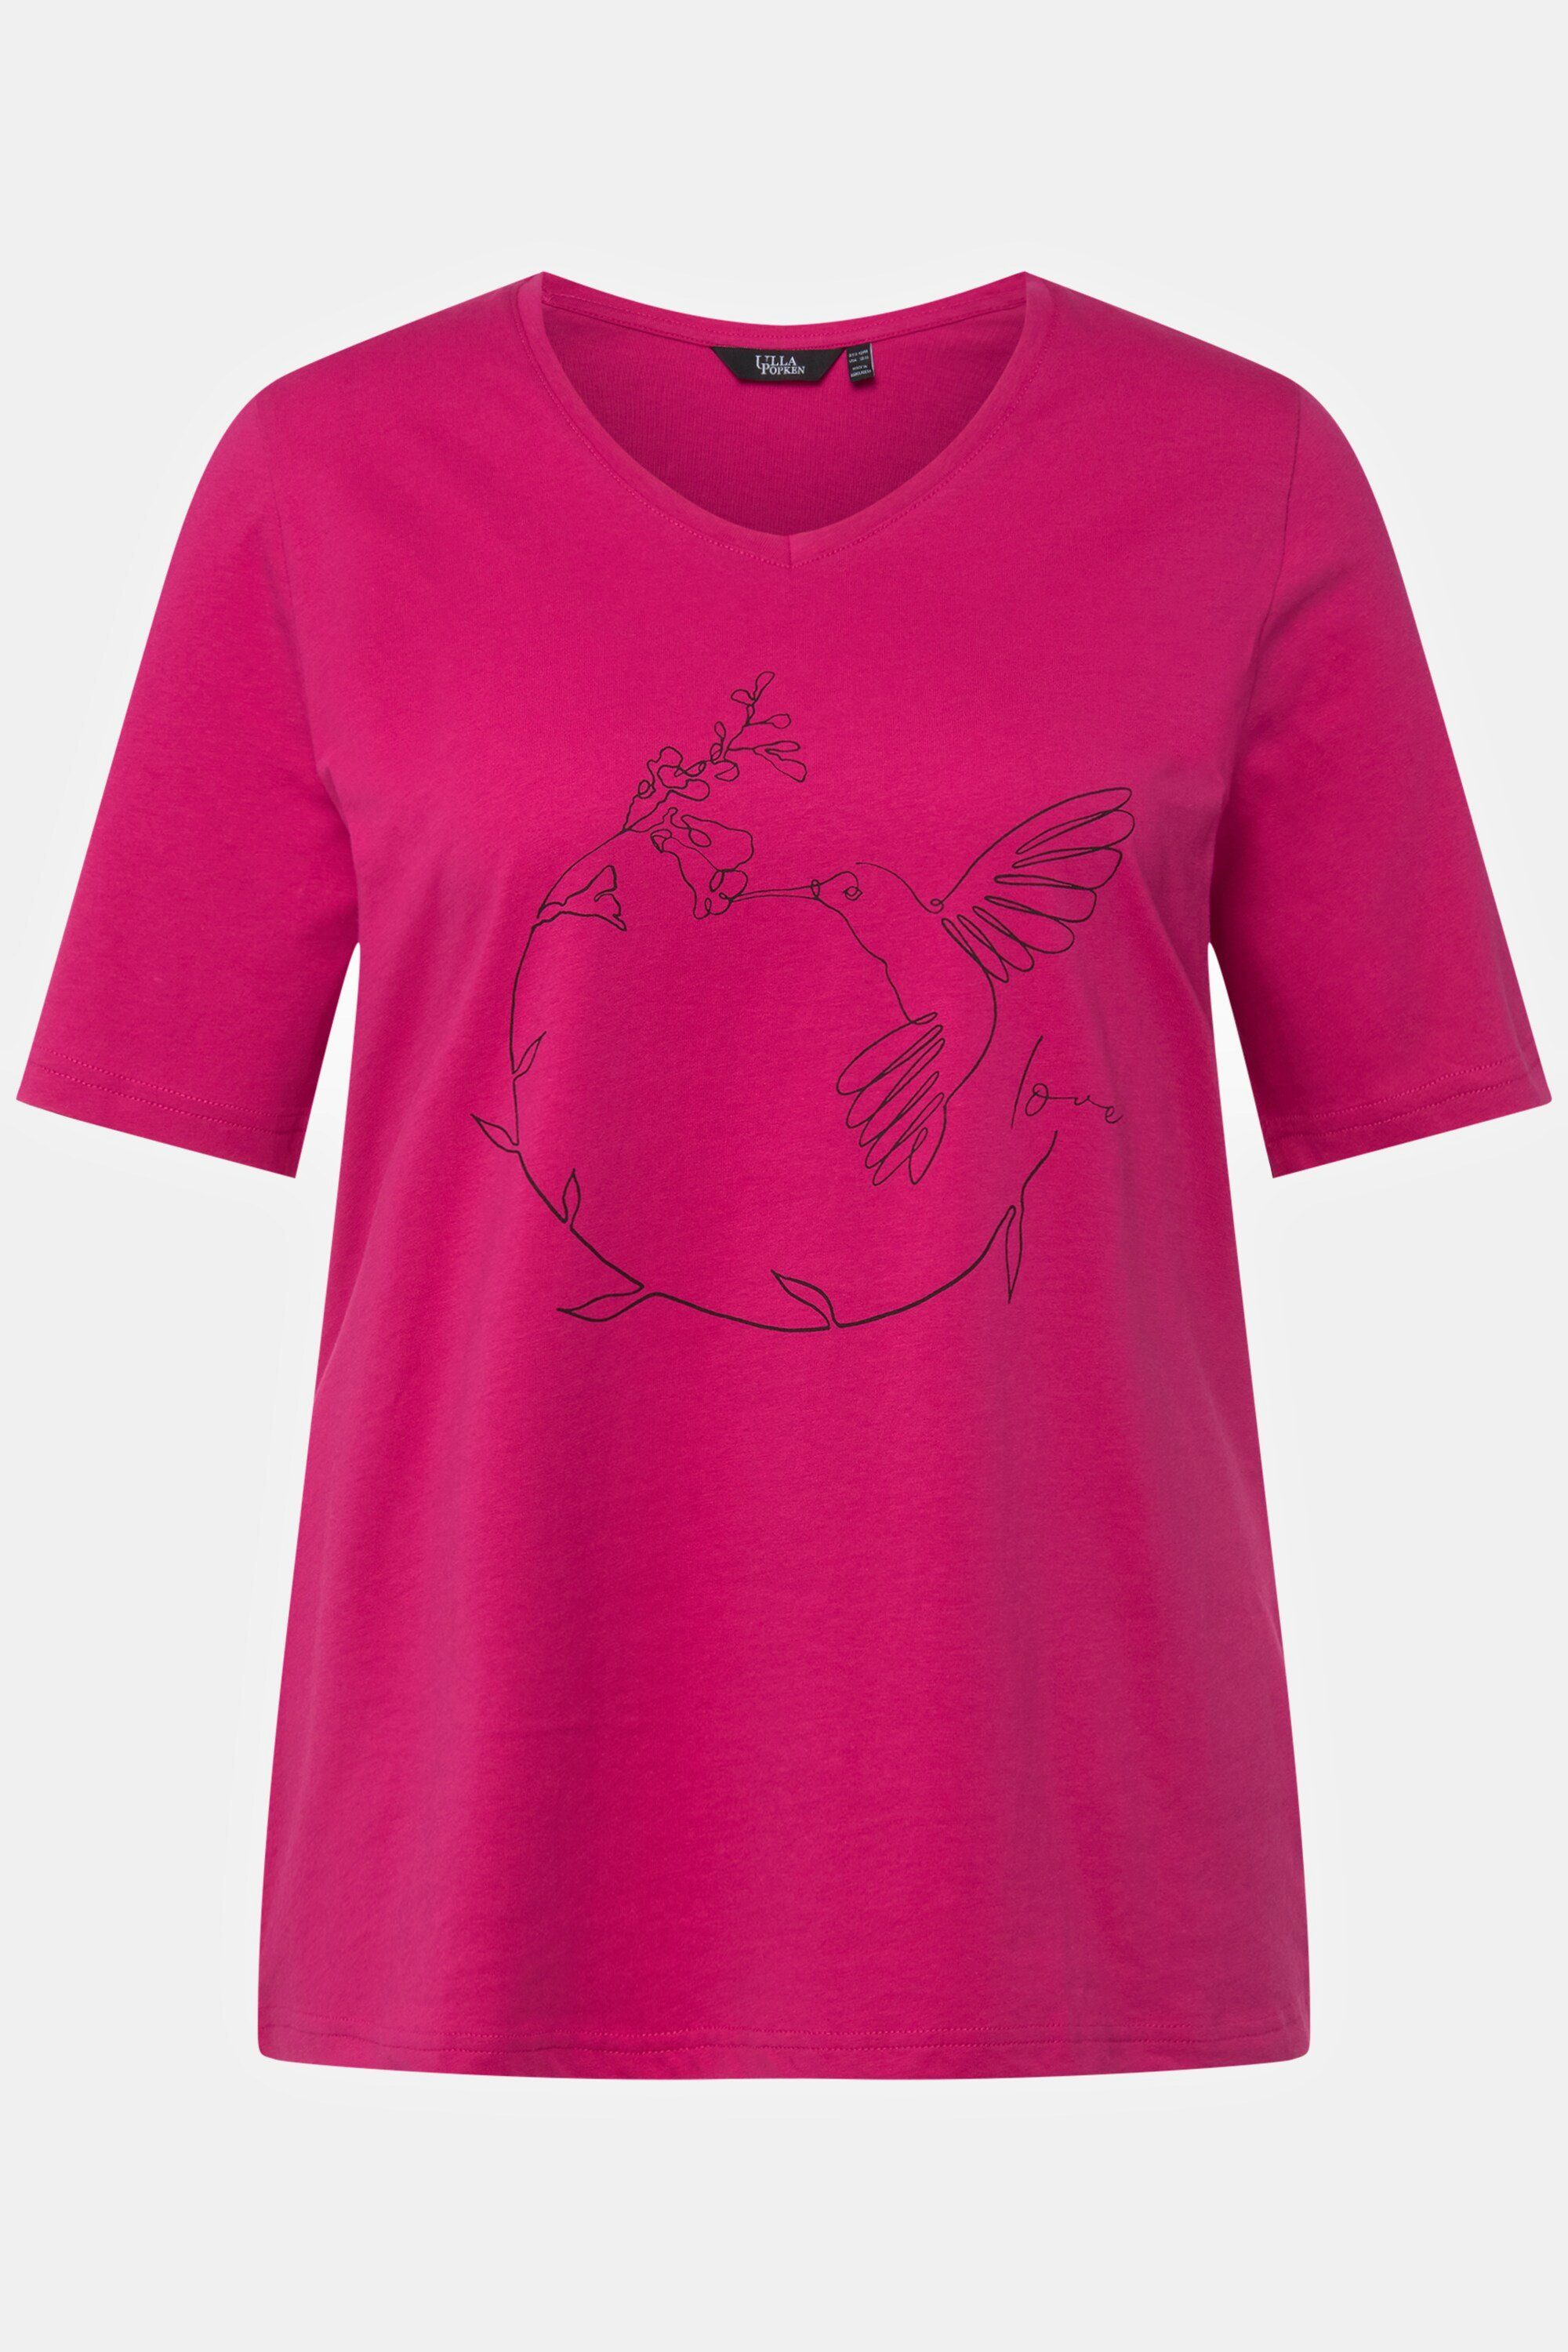 T-Shirt Classic Ulla Popken pink fuchsia Halbarm Rundhalsshirt V-Ausschnitt Kolibri